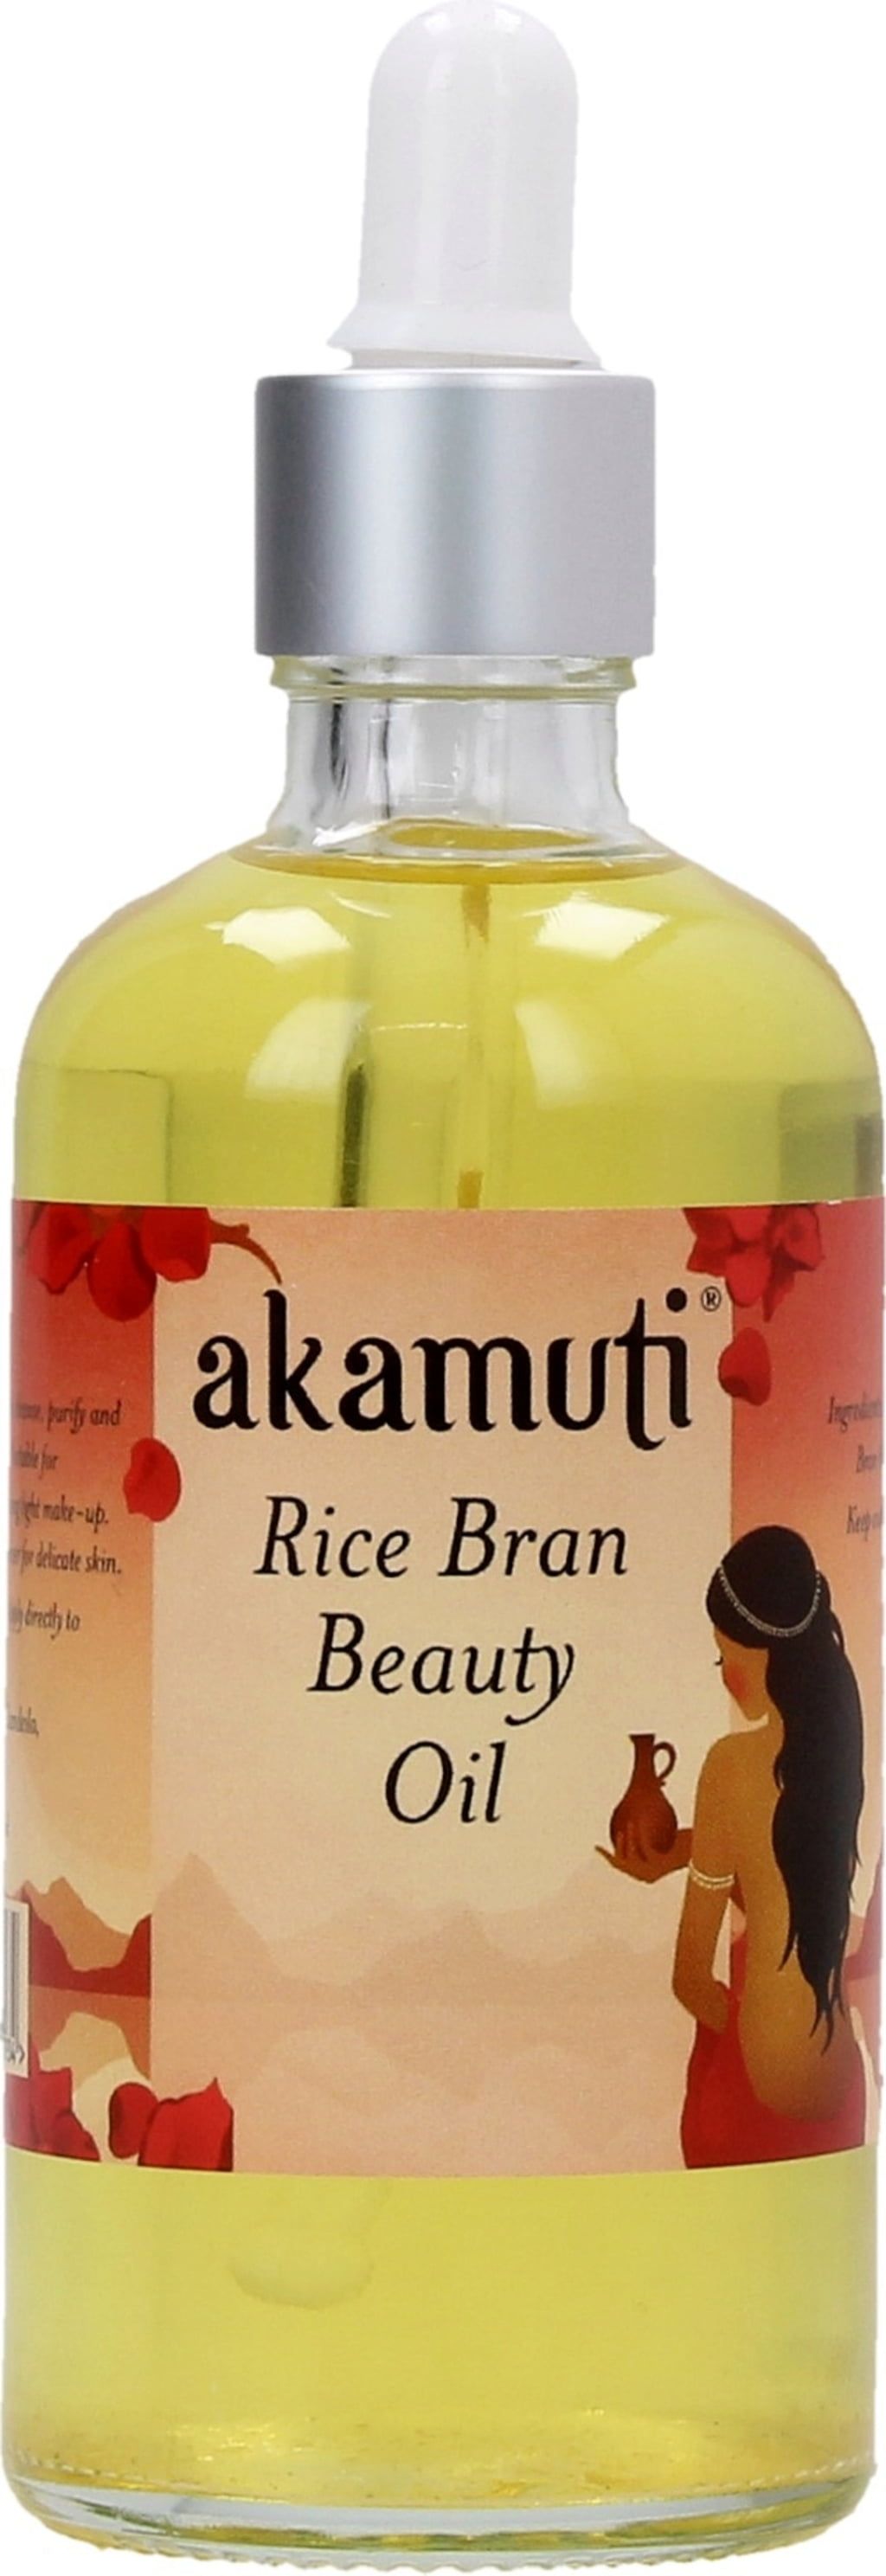 akamuti Rice Bran Beauty Oil - 100 ml